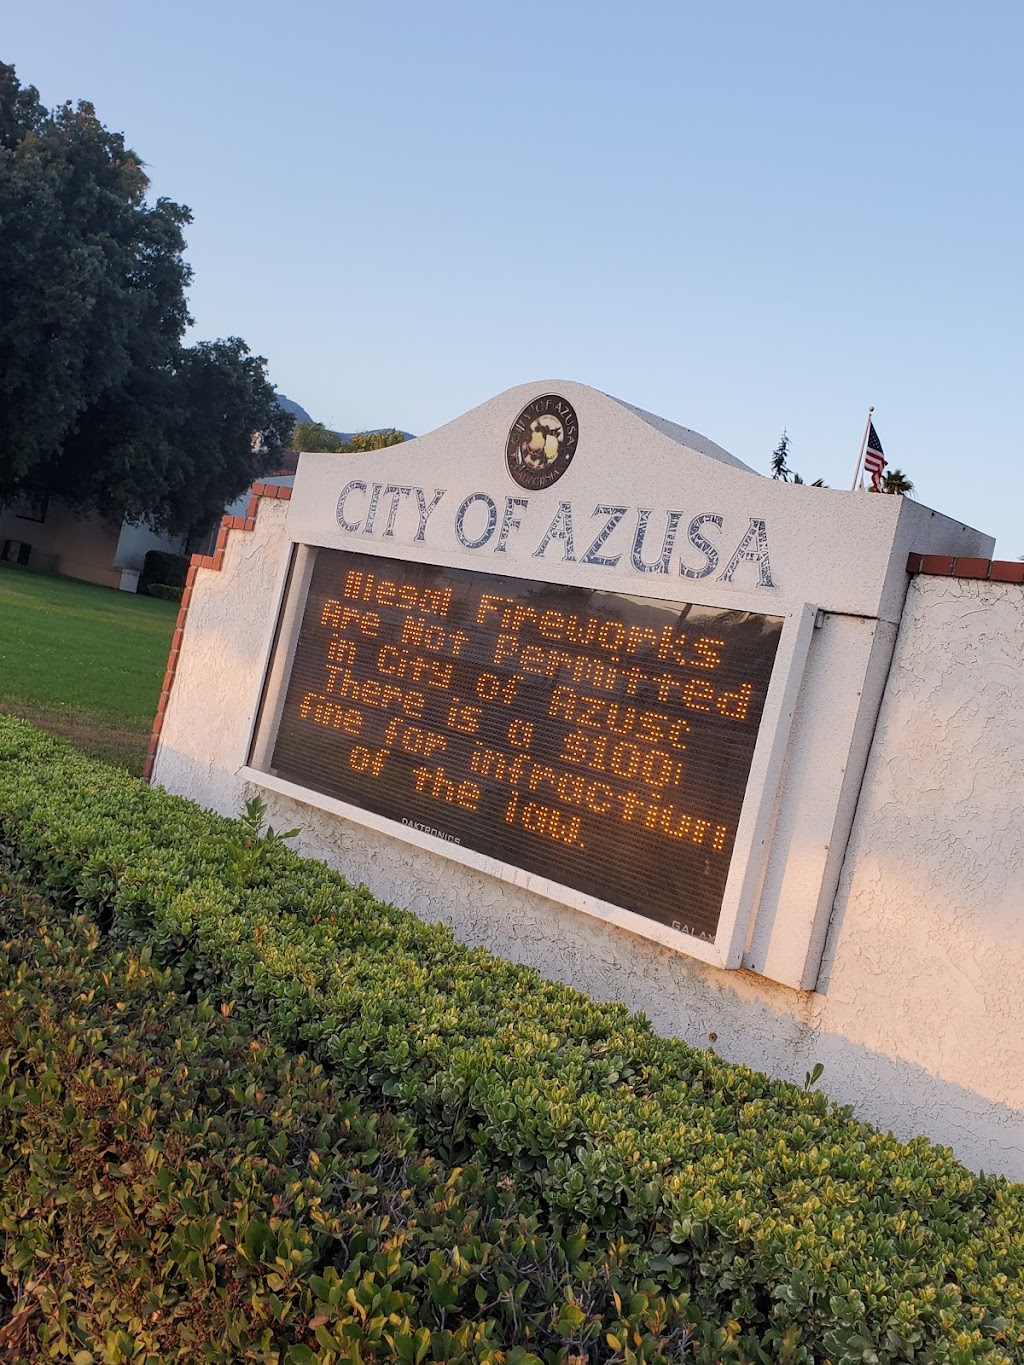 Azusa City Hall | 213 E Foothill Blvd, Azusa, CA 91702, USA | Phone: (626) 812-5200